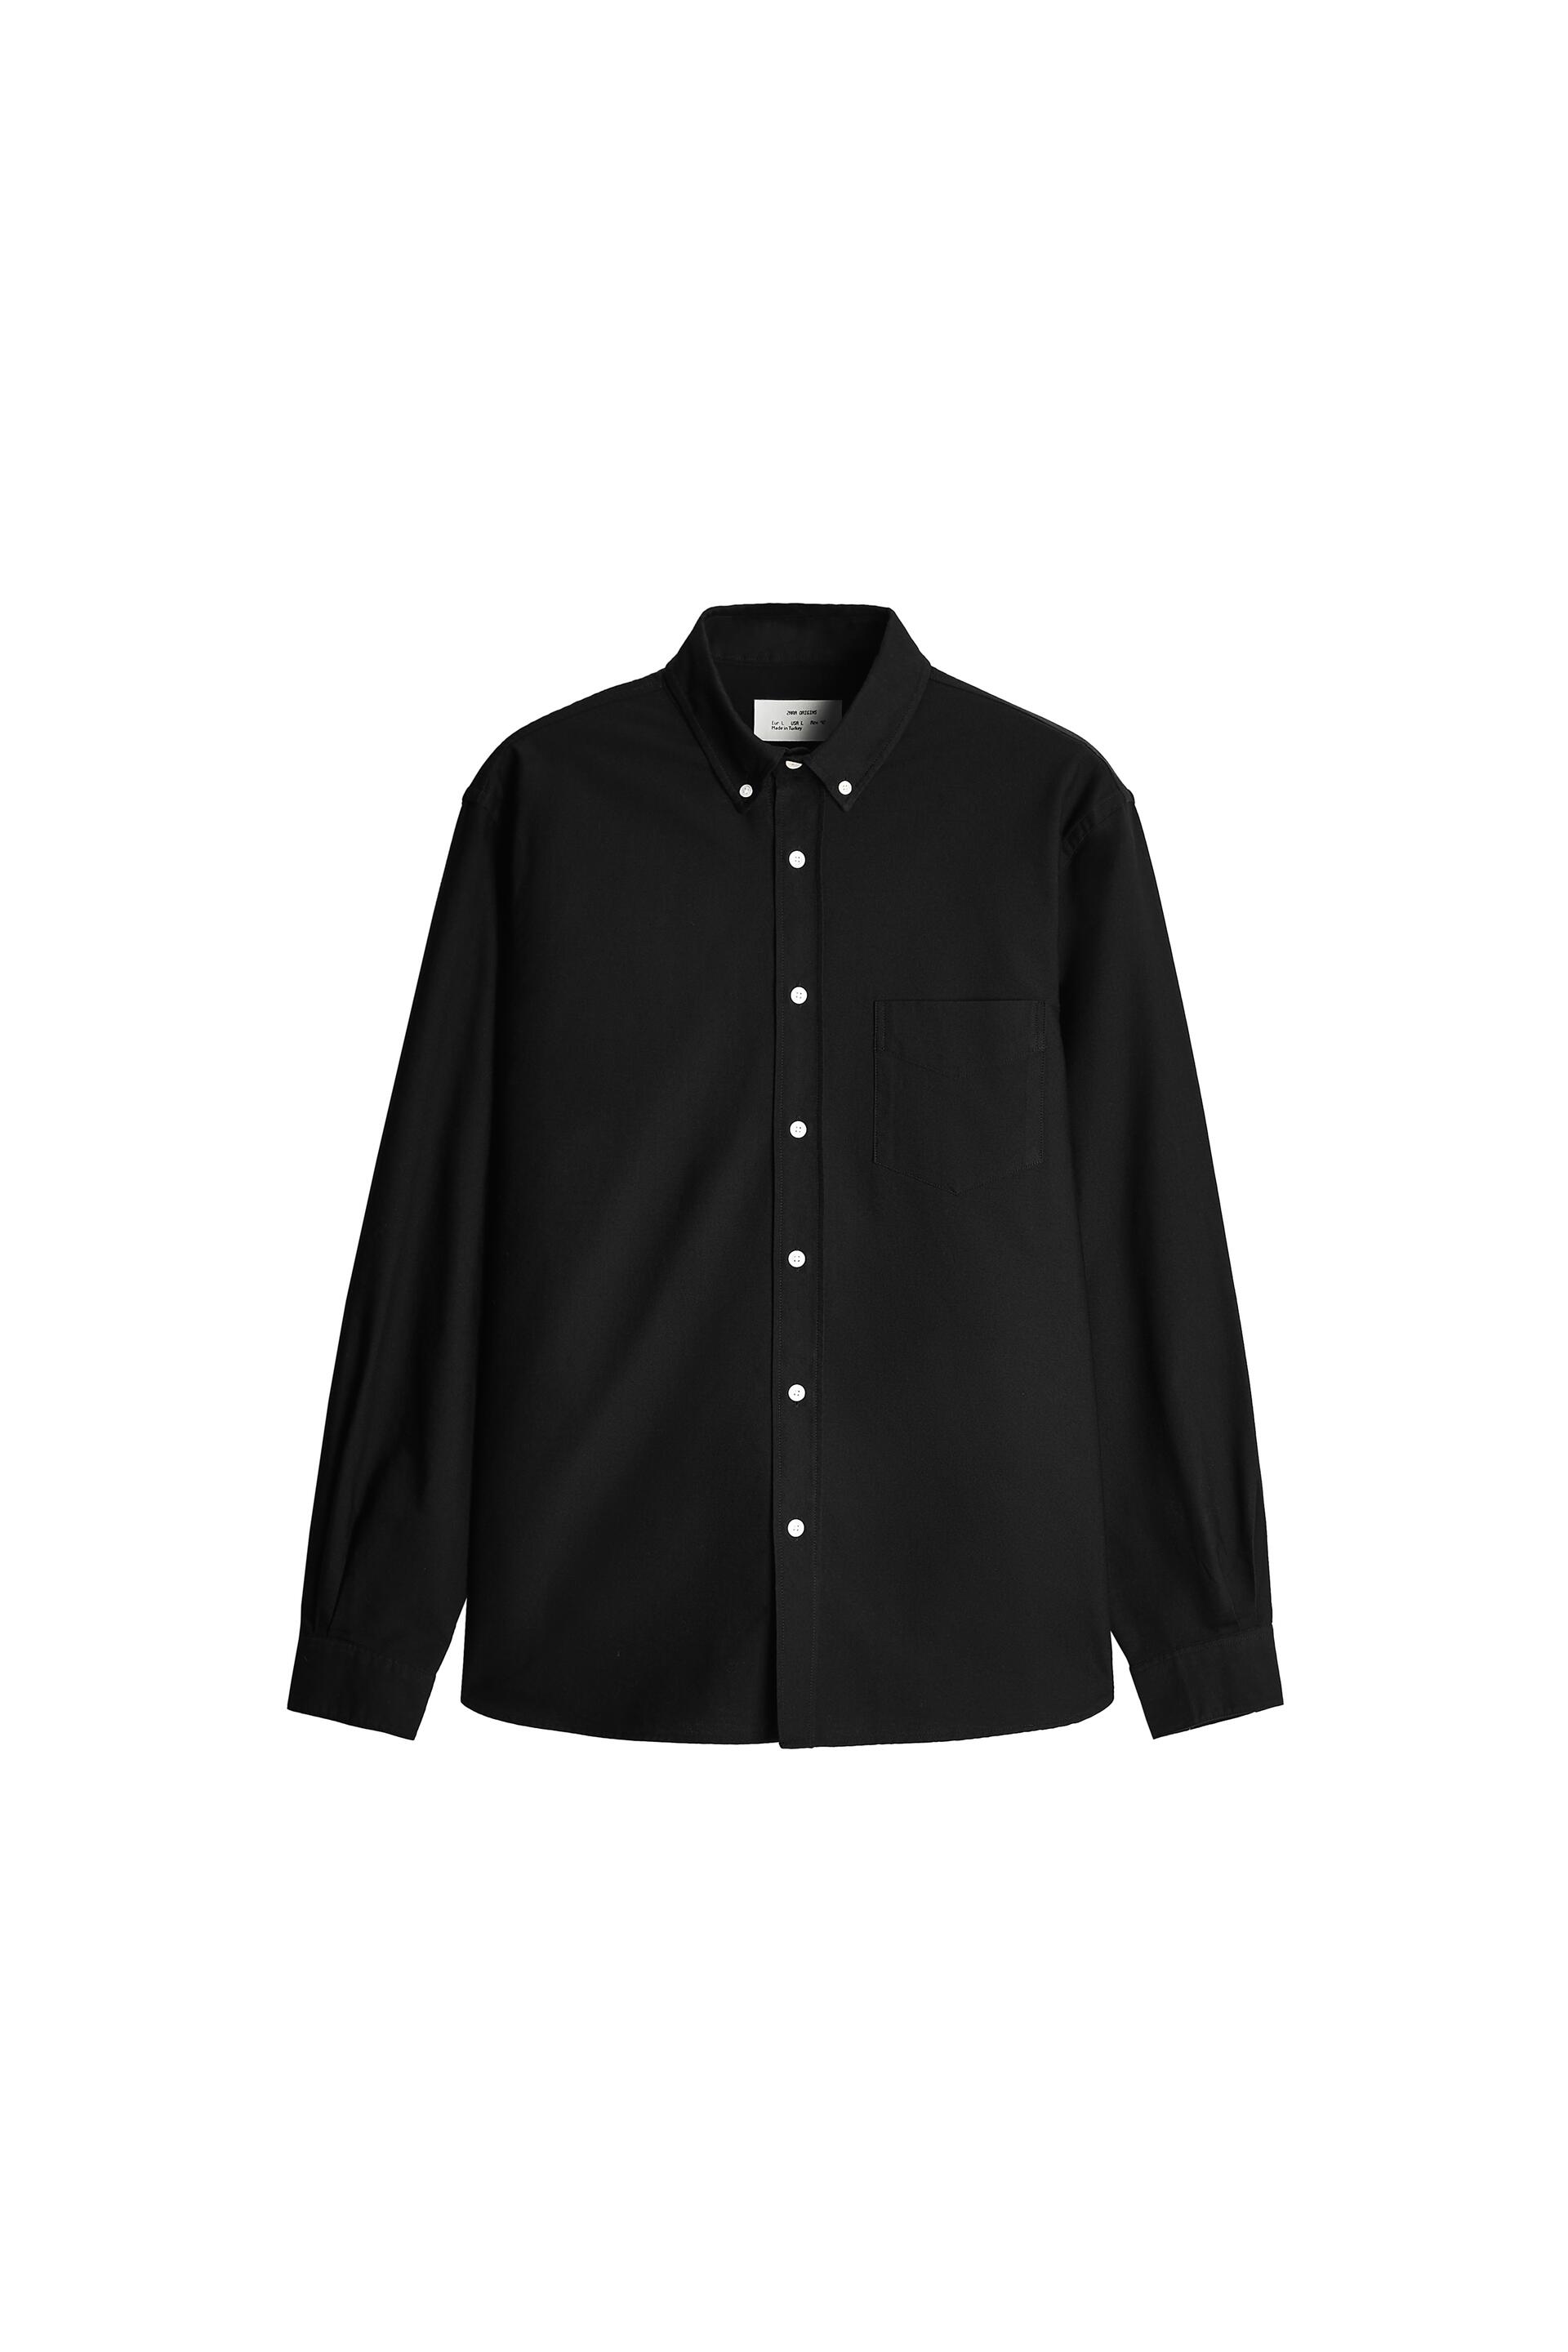 Рубашка мужская ZARA 07545508 черная XL (доставка из-за рубежа)